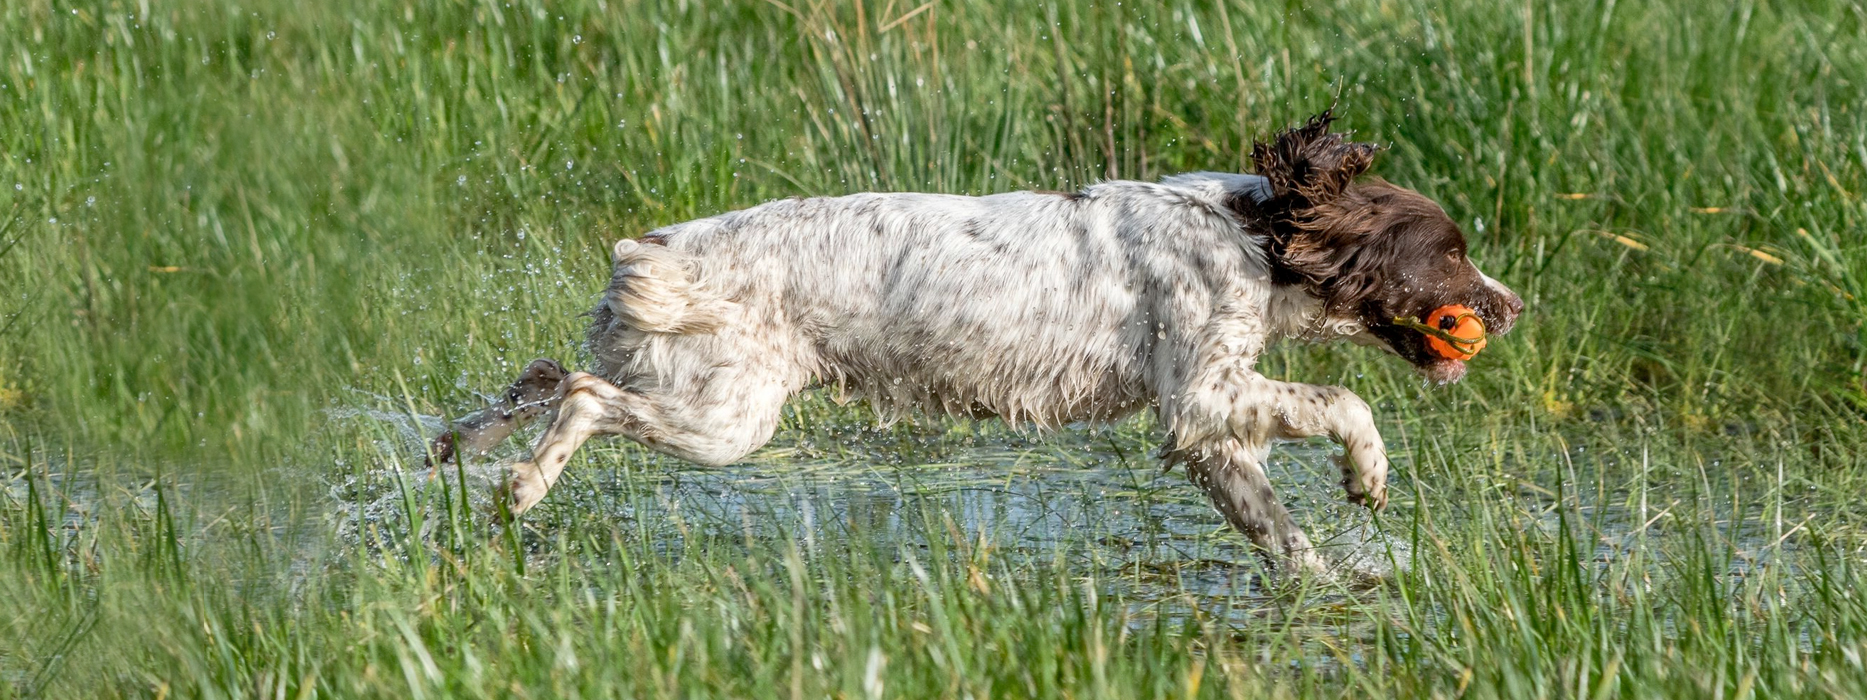 Spaniel running through water